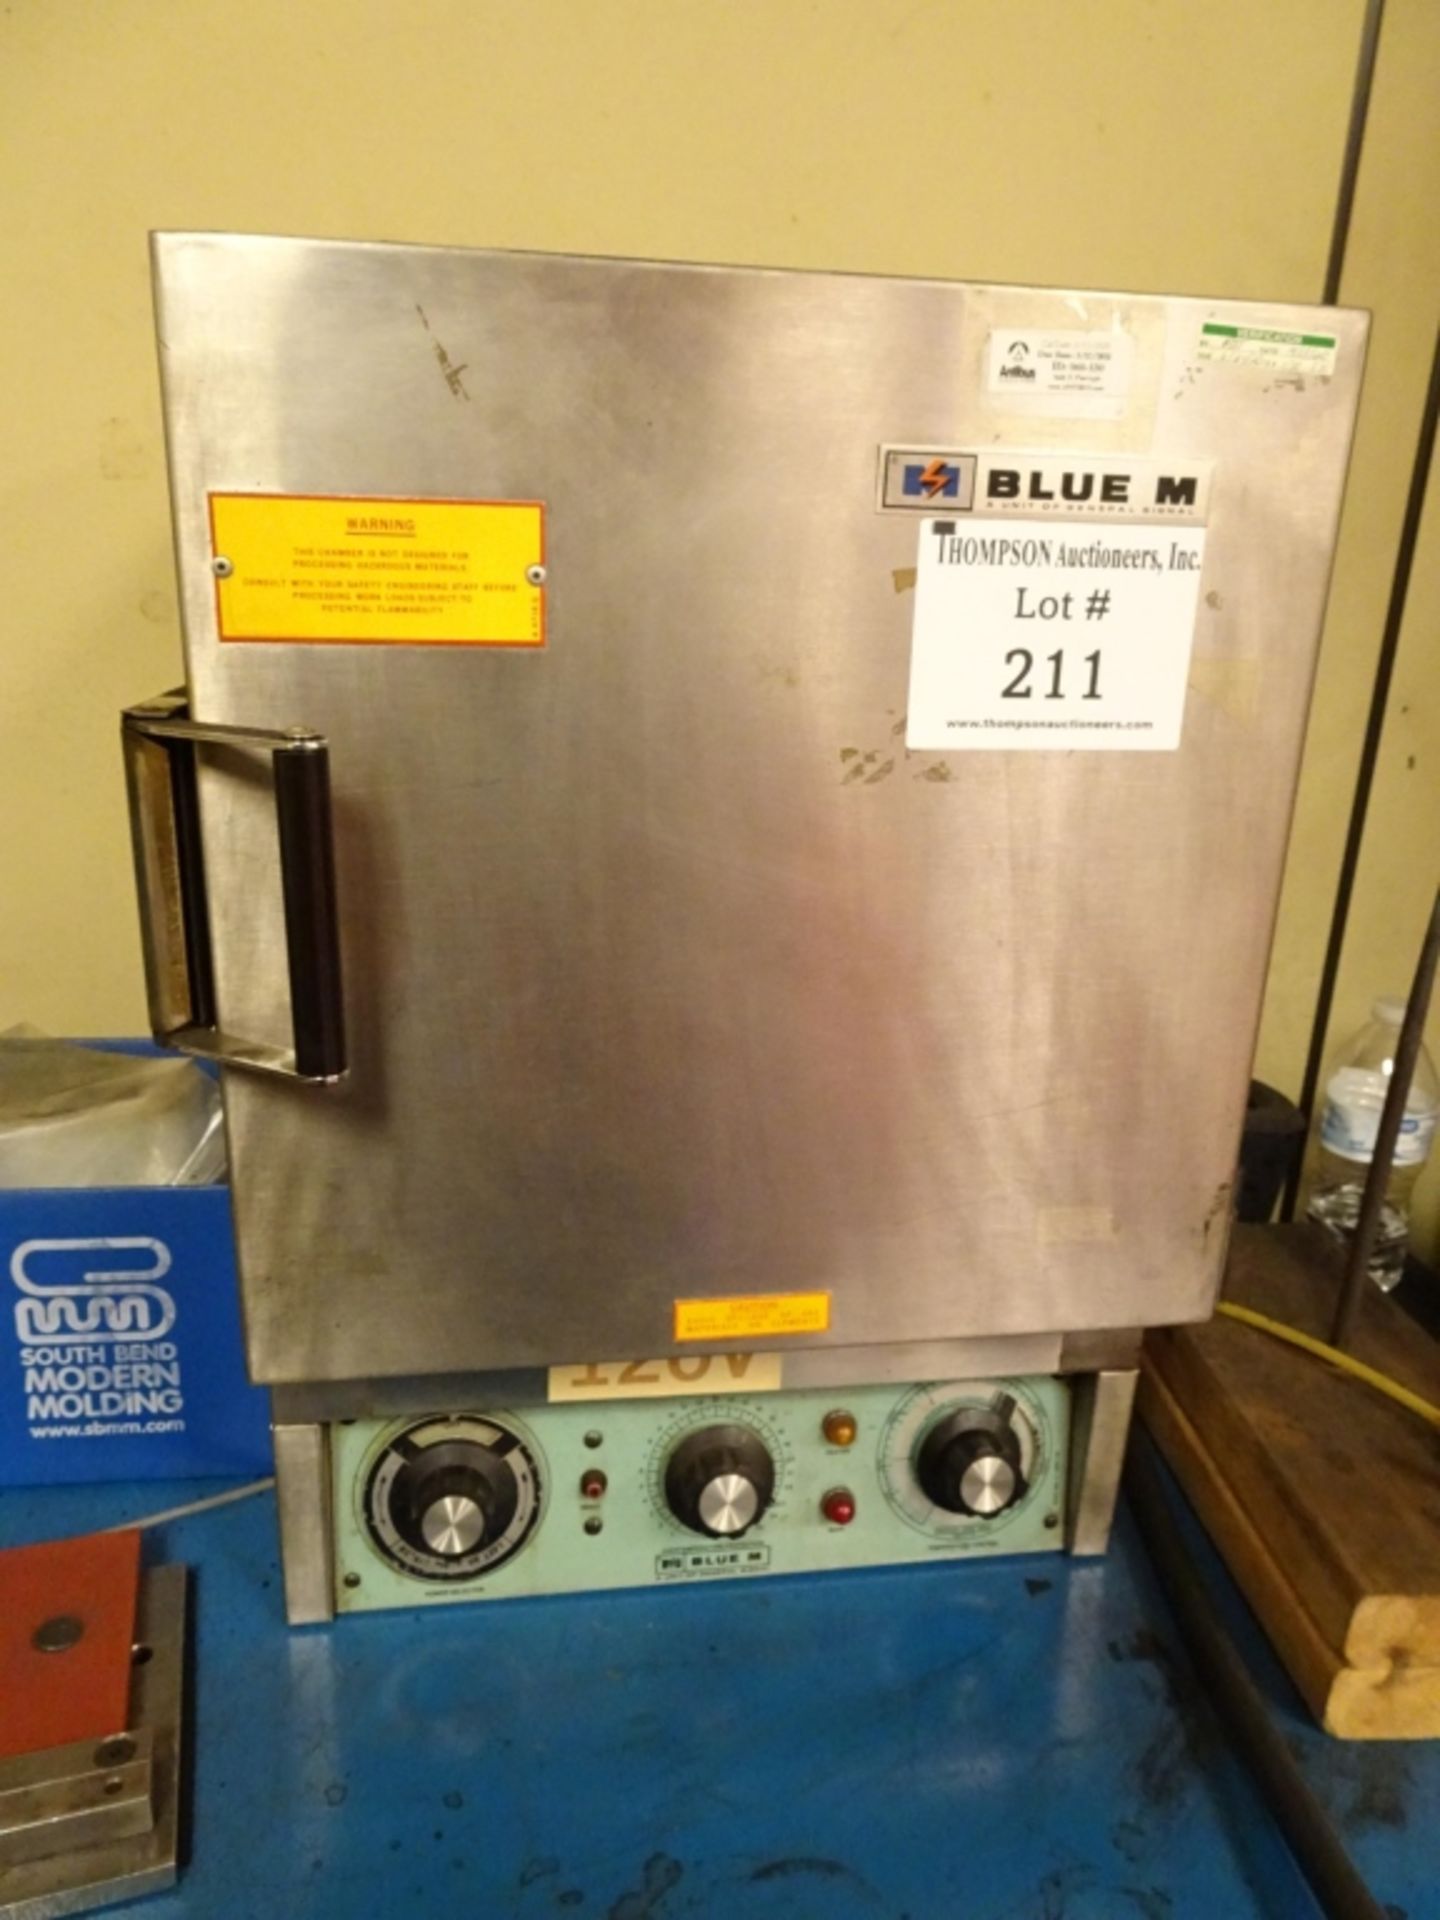 Blue M Model OV-12A Bench Top Lab Oven Max Temps 260 Degree C / 500 Degree F 120V, 1ph, 60Hz, sn